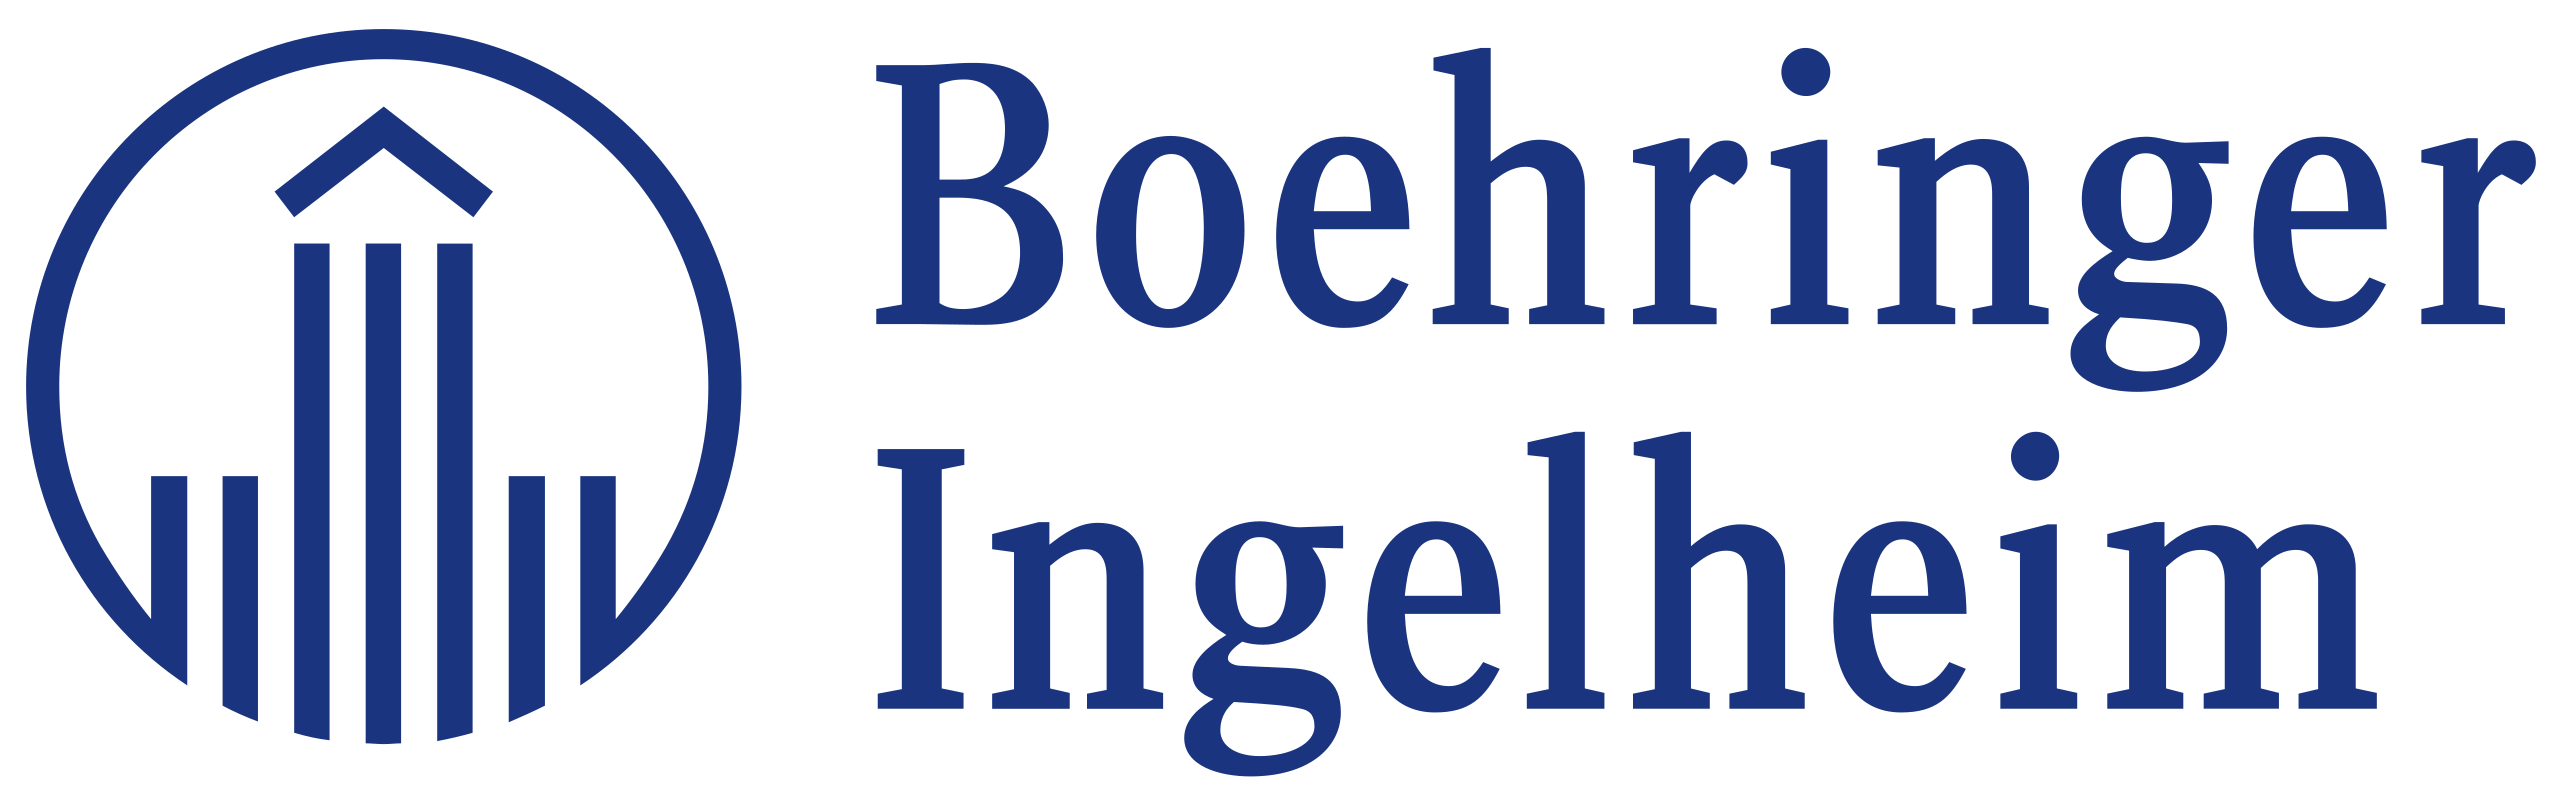 Boehringer Ingelheim PIC